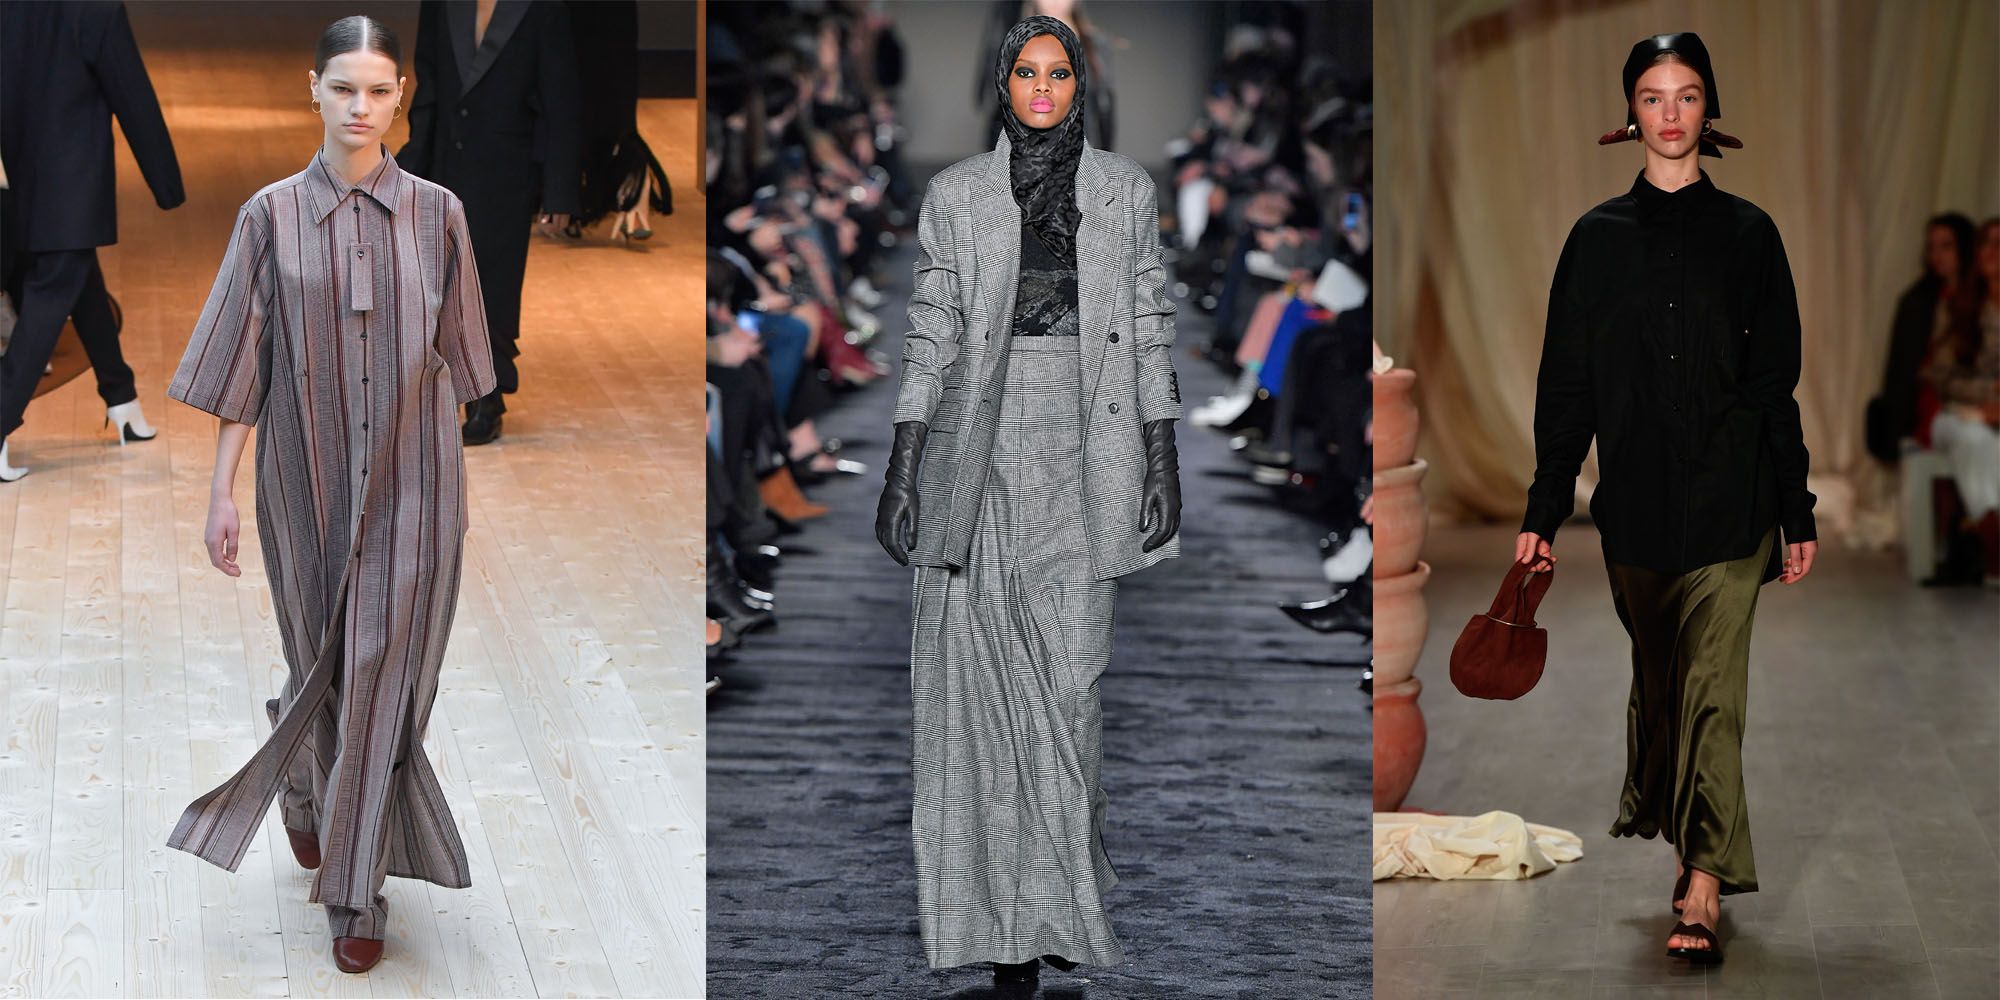 Inwoner Begrafenis saai Modest fashion is een enorme modetrend, maar wat is het precies?